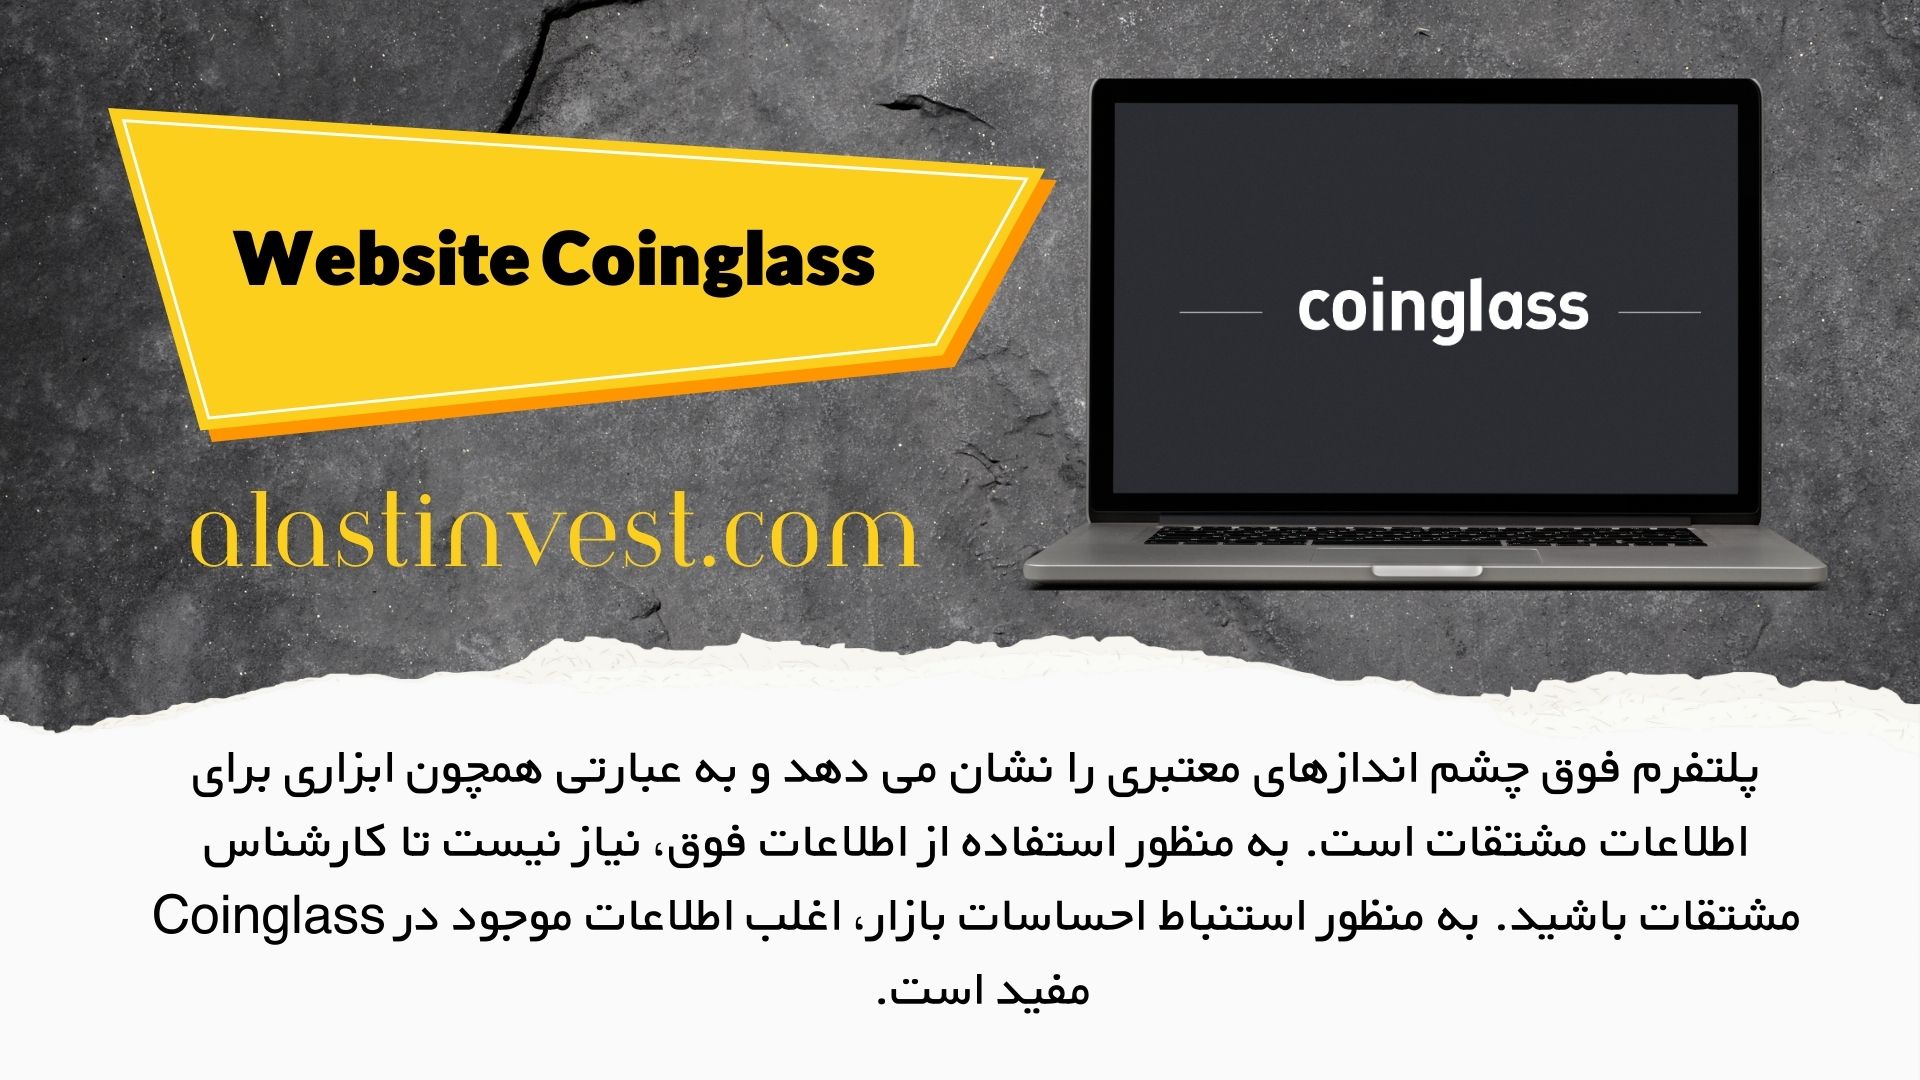 Website Coinglass: